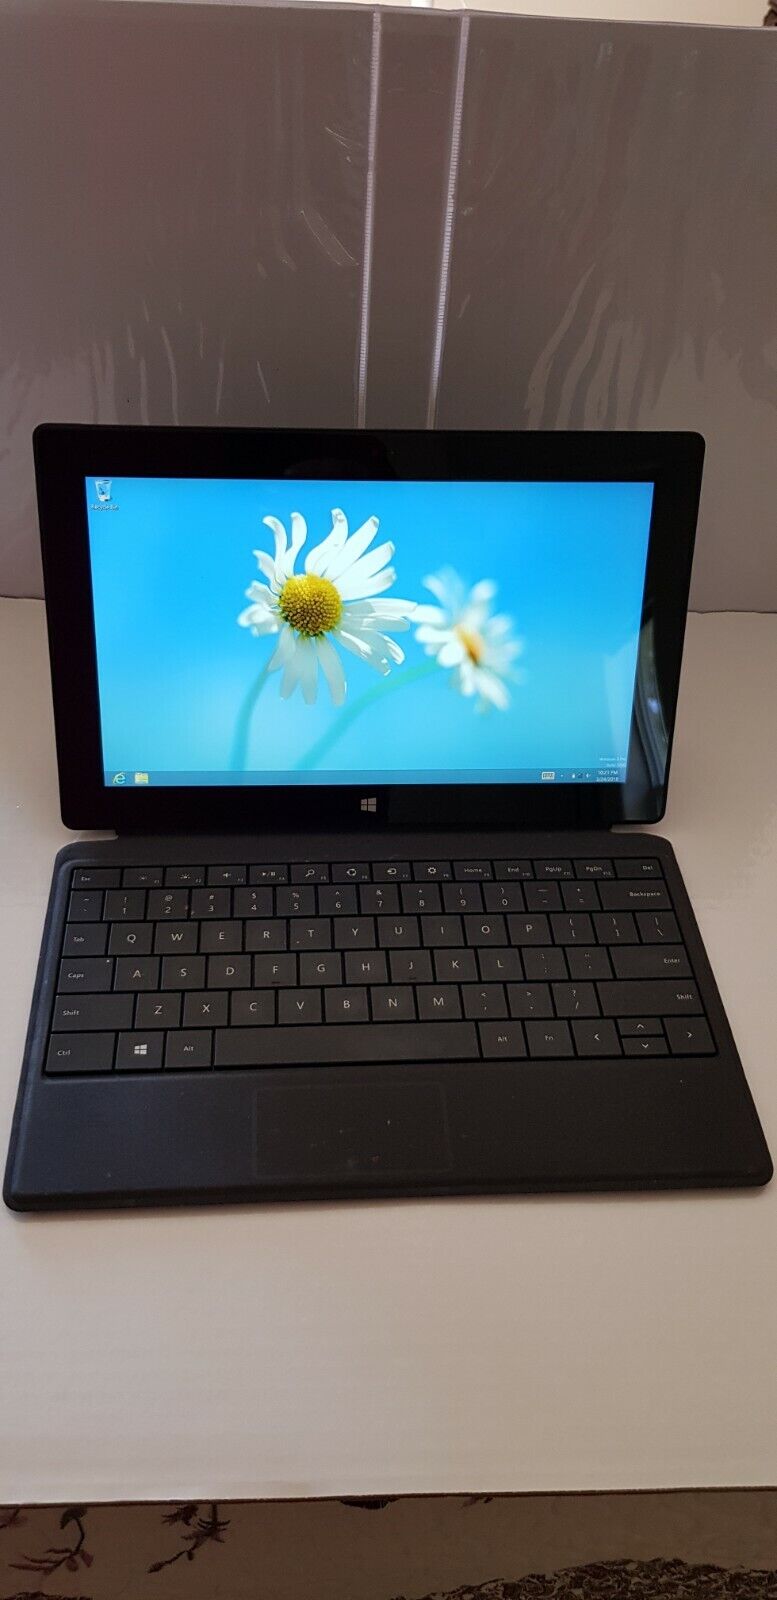 Microsoft Surface Pro Model 1514 64 GB with Keyboard Core i5-3317U CPU